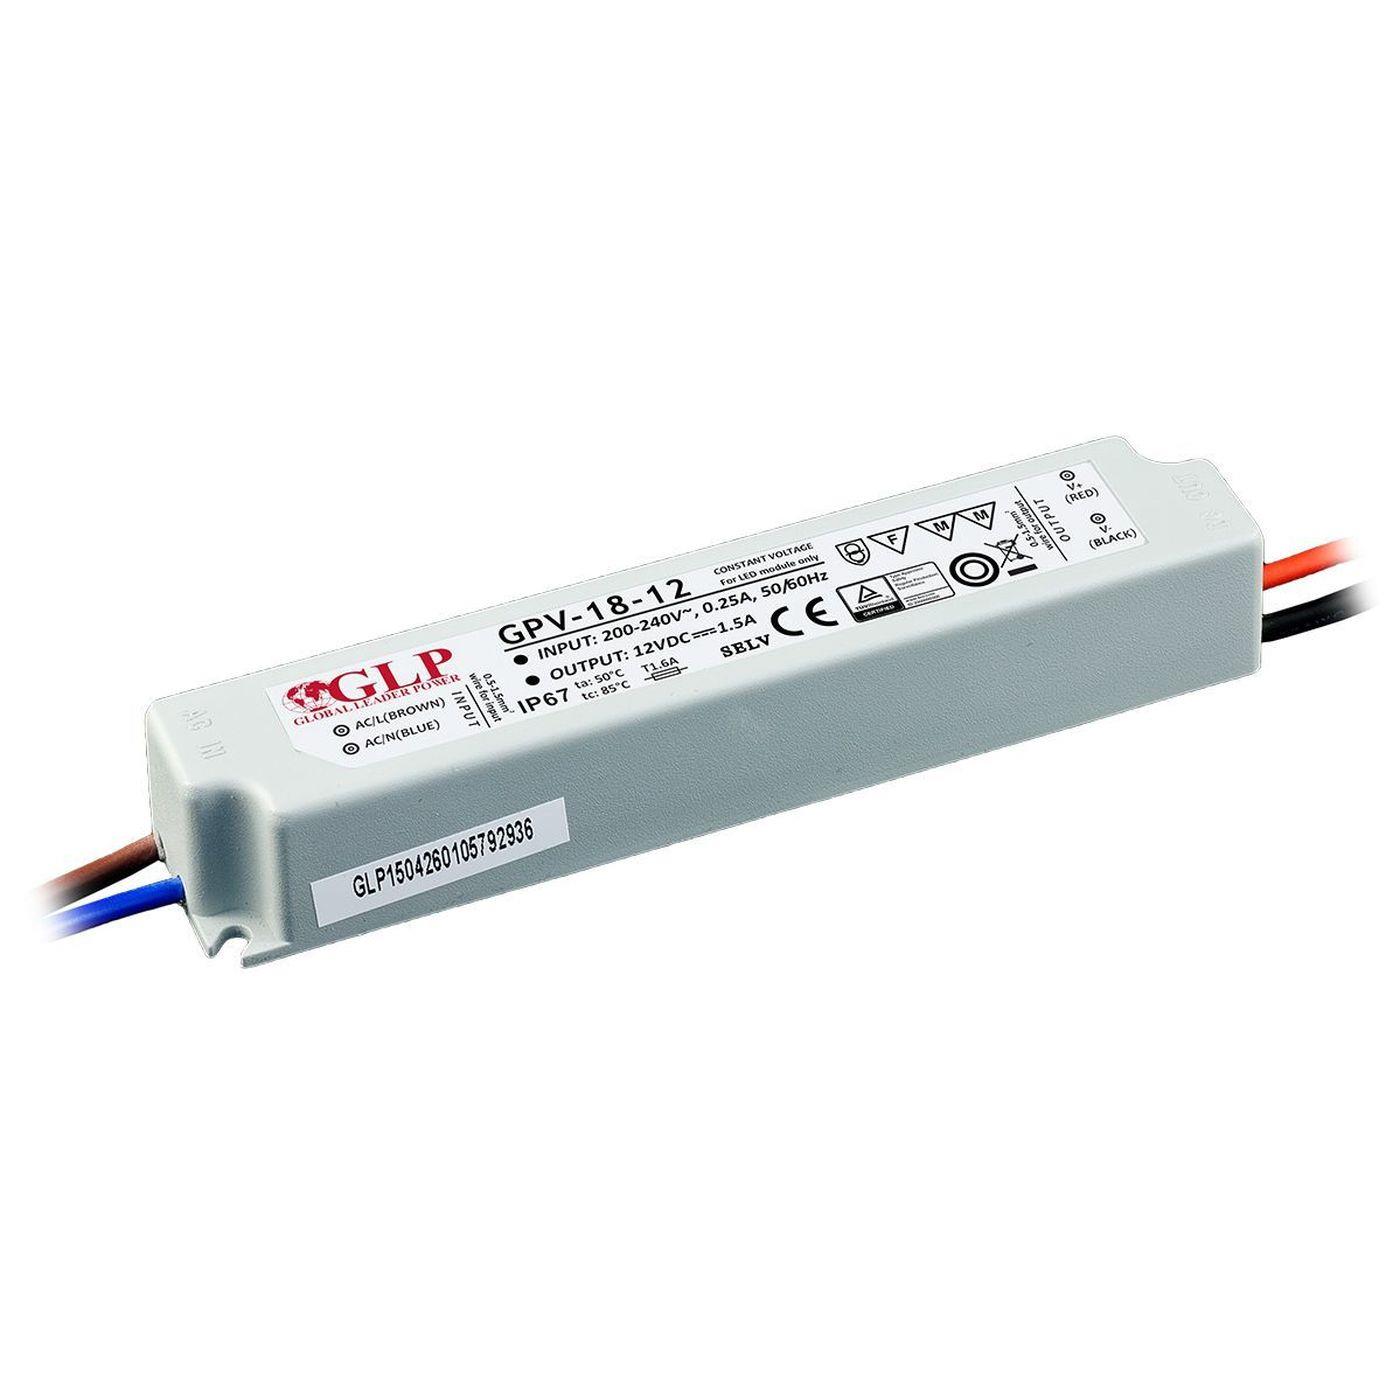 GPV-18-24 18W 24V 0,75A LED power supply Transformer Driver IP67